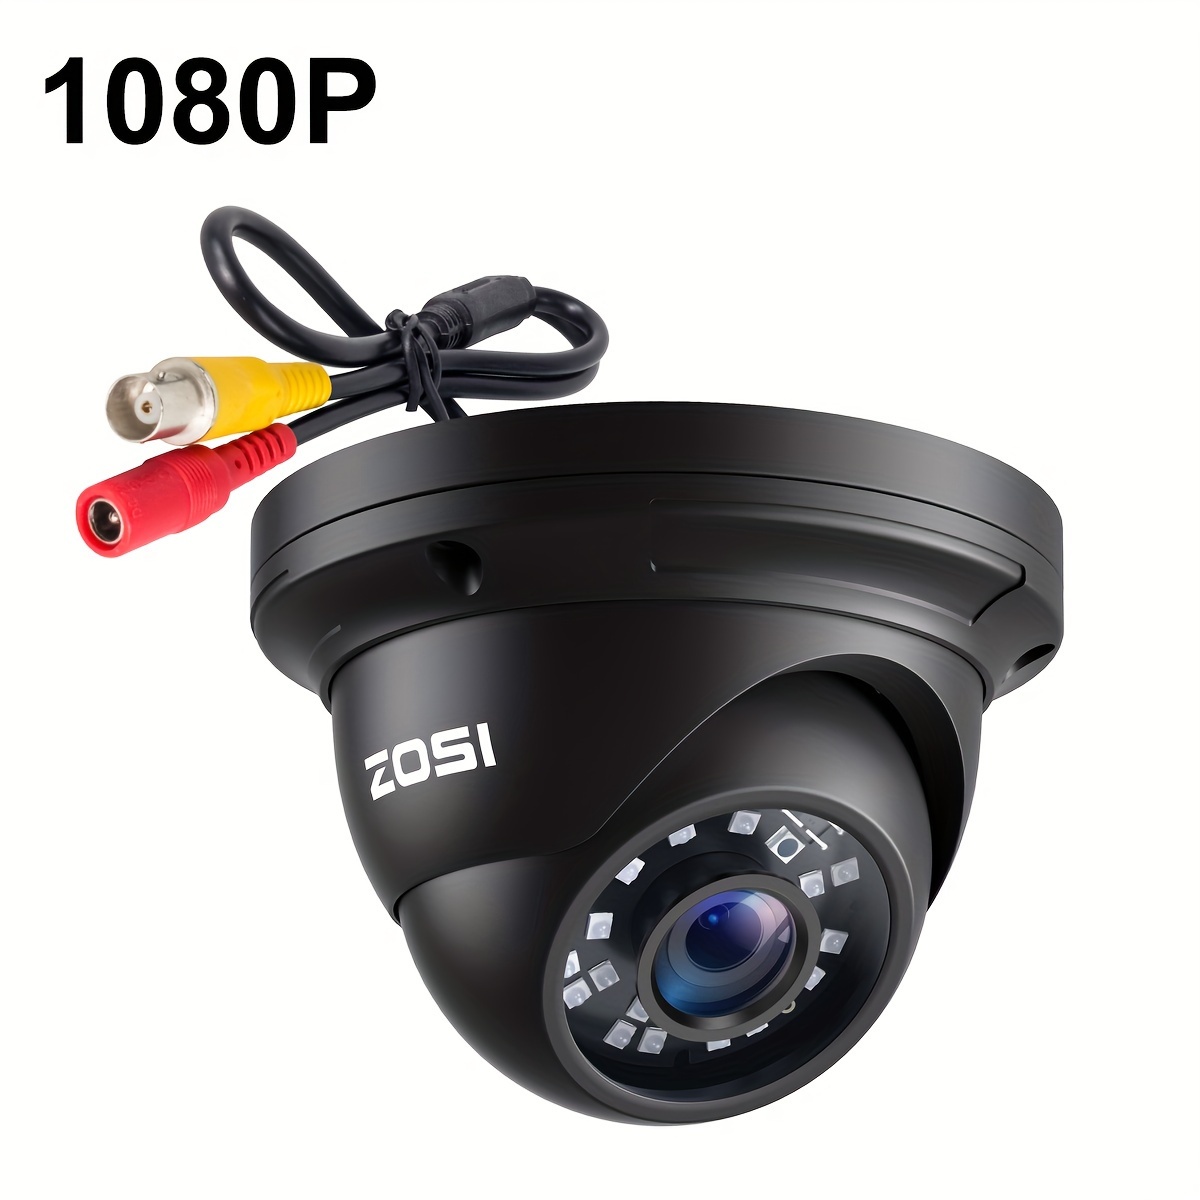 

Zosl 1080p Full Hd Outdoor Dome Security Cameras Professional Cctv Camera For Outdoor Indoor Surveillance